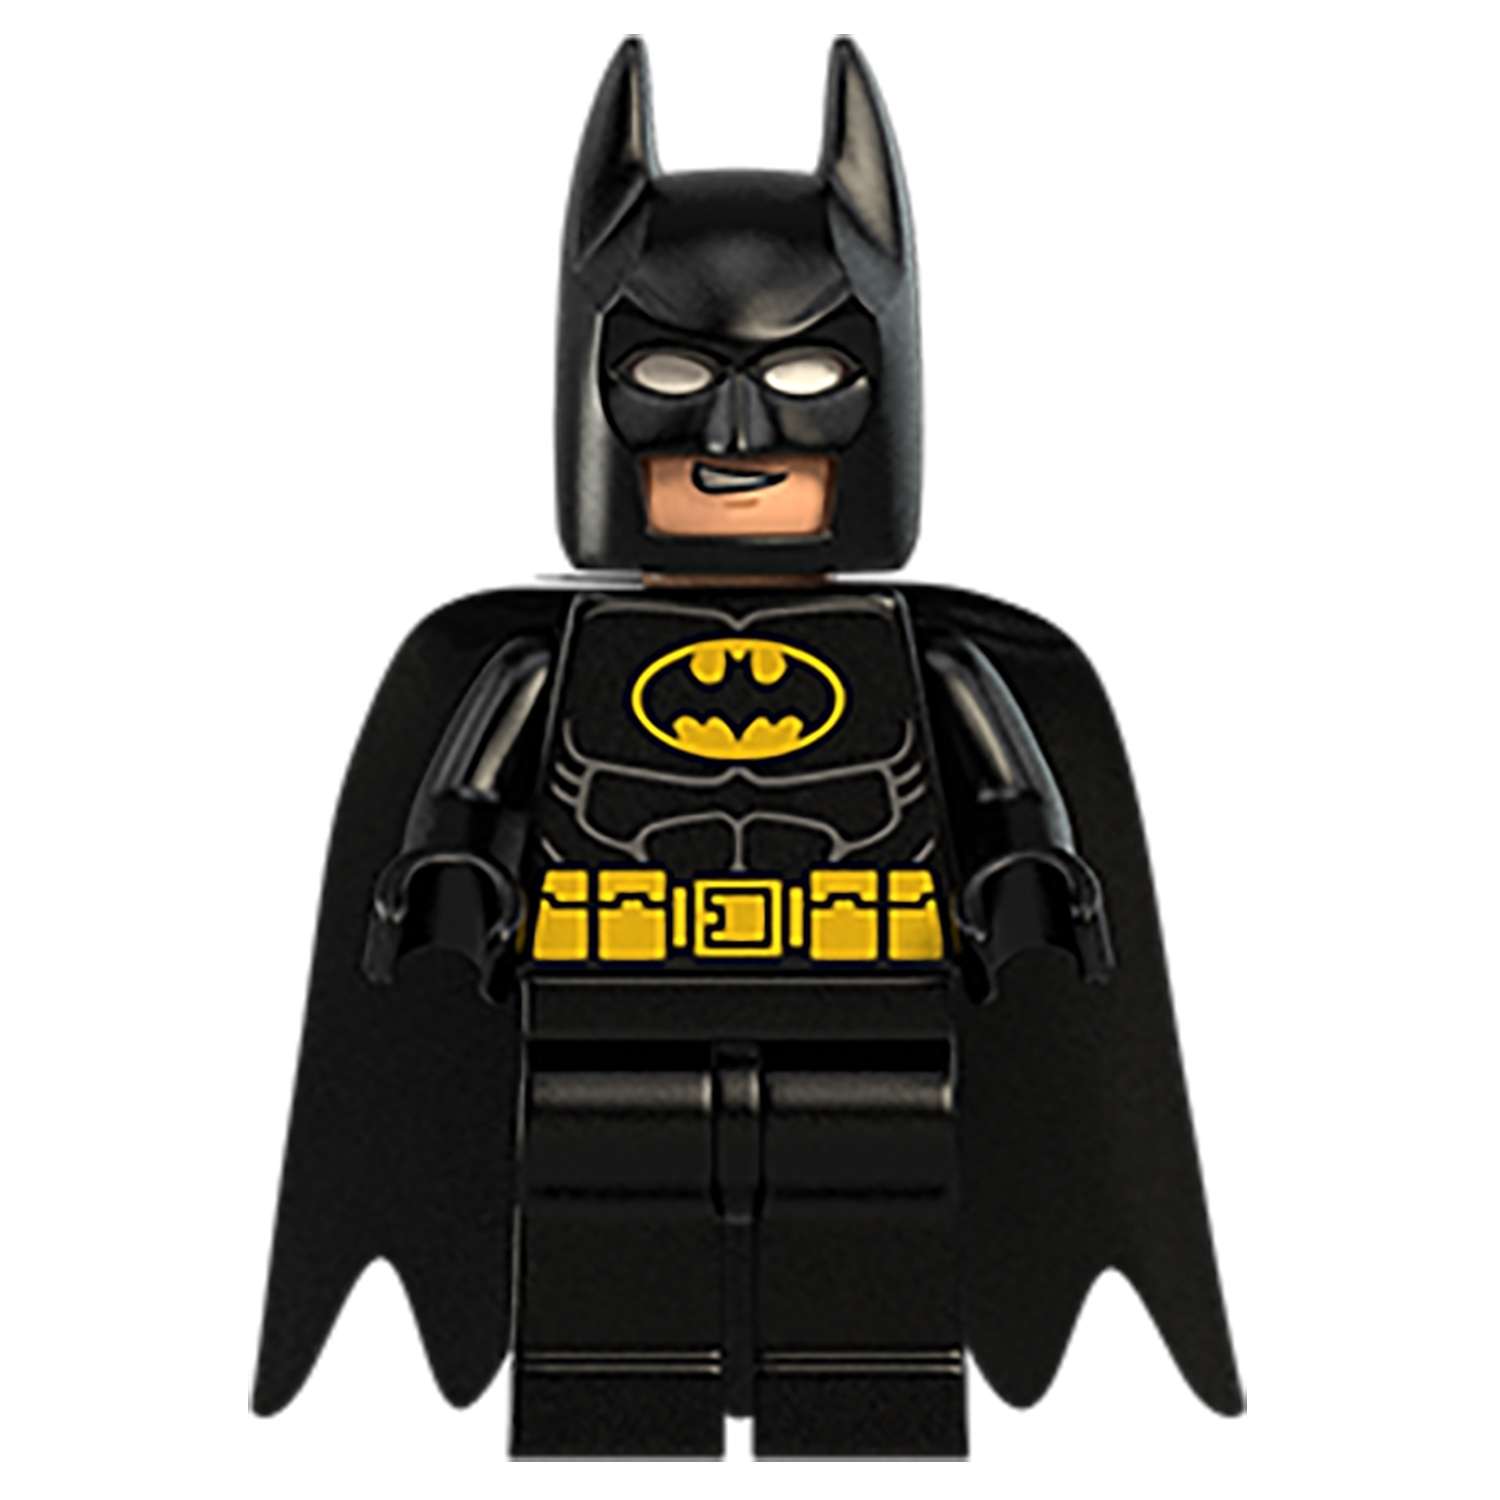 Конструктор LEGO Super Heroes Бэтмен™: Паровой каток Джокера (76013) - фото 9